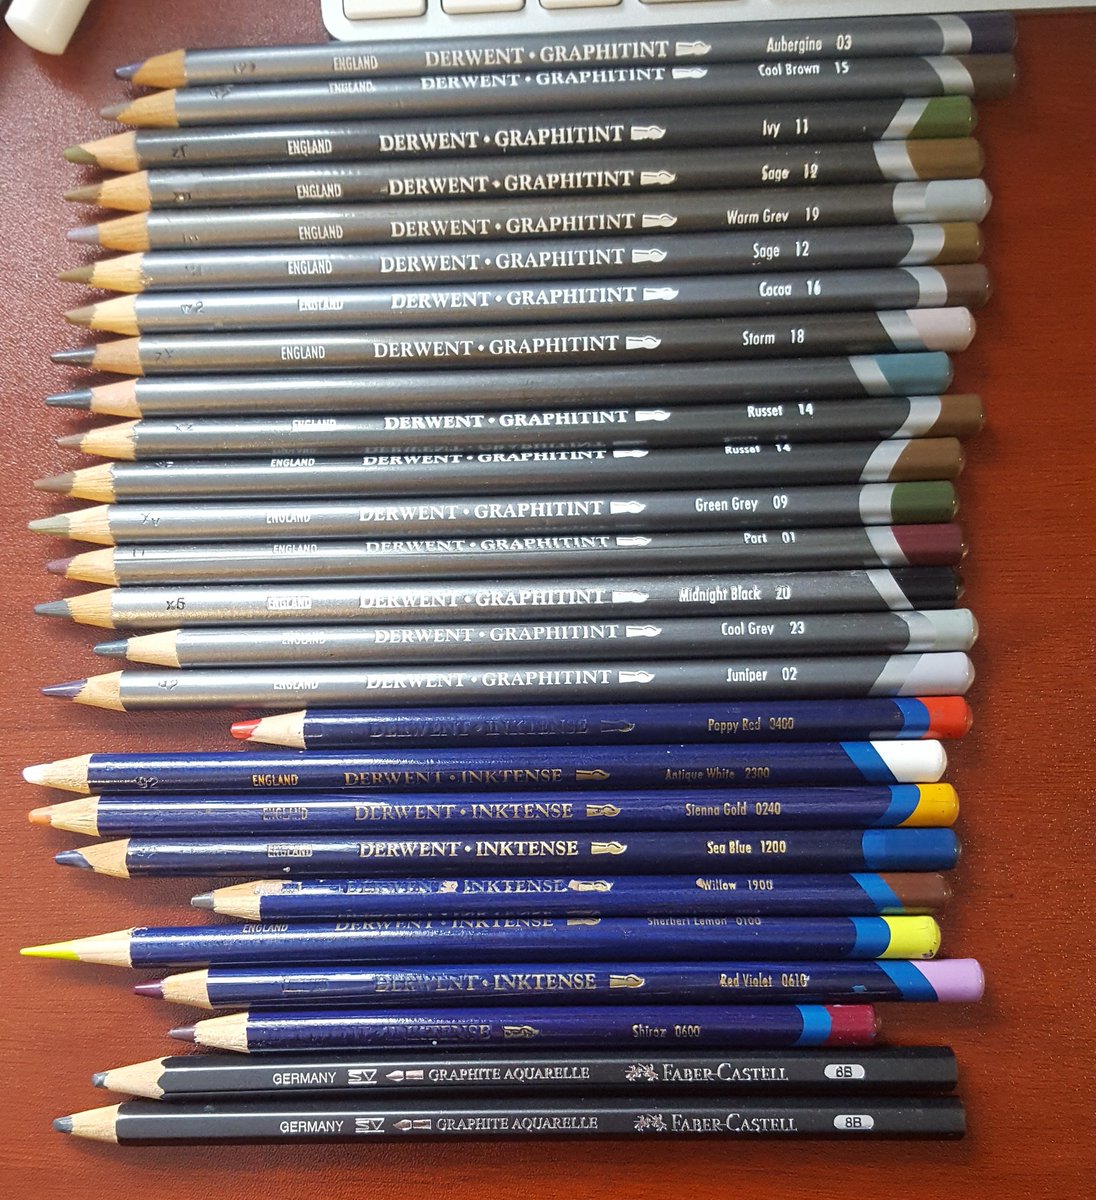 ?sales post?

* koh-i-noor tritone pencils (missing 2) +derwent coloursoft pencils (30usd)

*Lead pencils 0.3, 0.5, 0.3, 0.7 (20usd)

*Derwent graphitint + inktense pencils (30usd)

*Fw mix media empty paint markers (new 10usd)

Shipping 10usd. 
Email maruti0bitamin@gmail.com? 